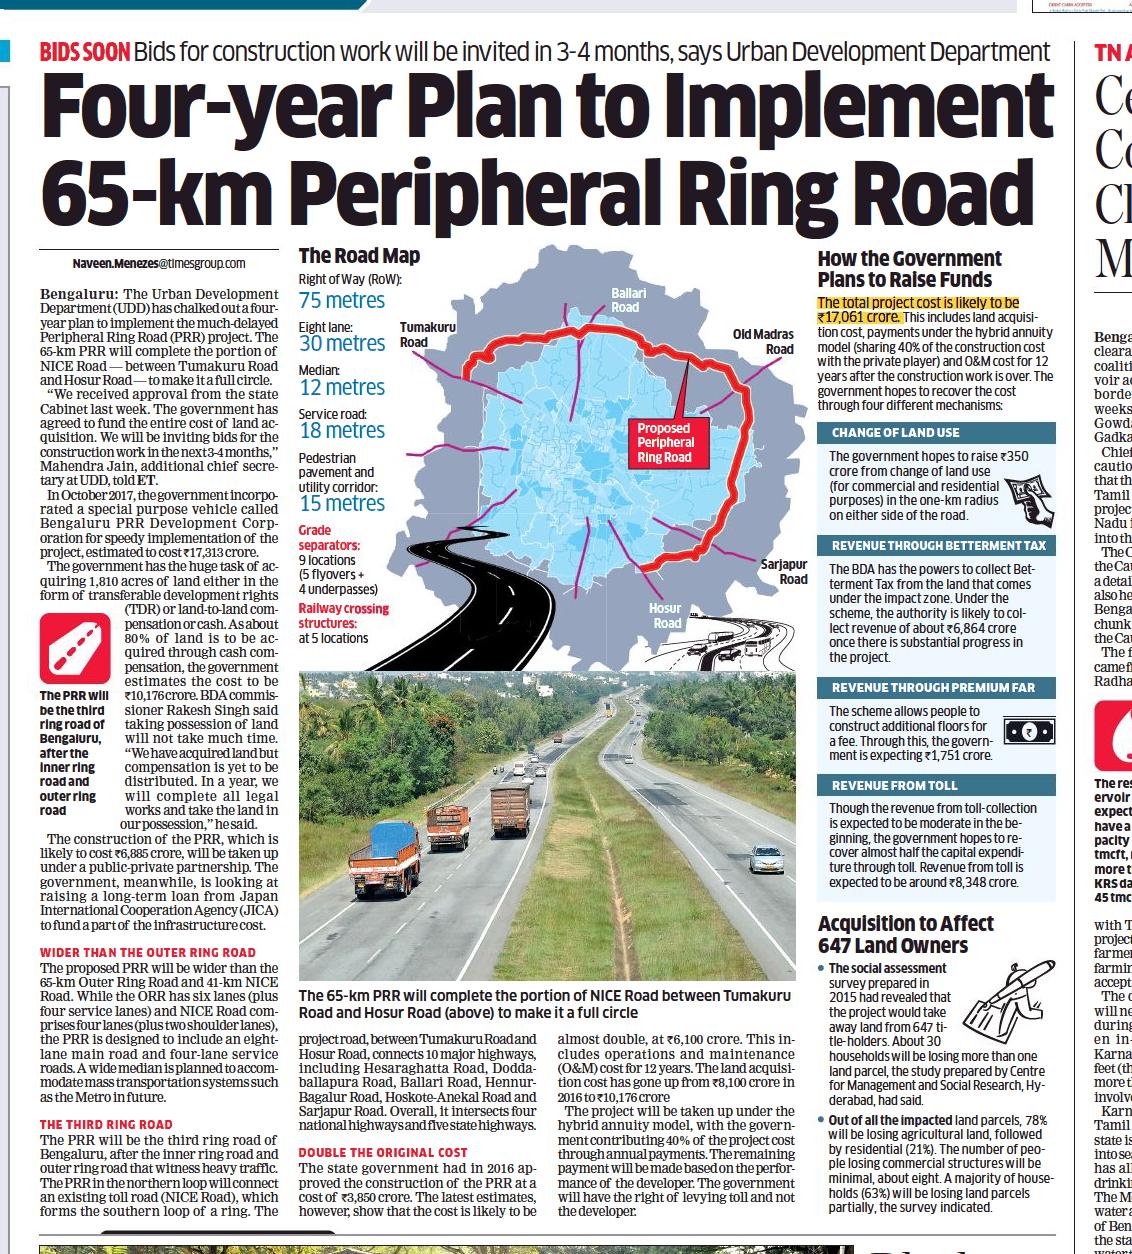 Nitin Gadkari makes an offer for Bengaluru's peripheral ring road that  Karnataka cannot refuse - The Economic Times